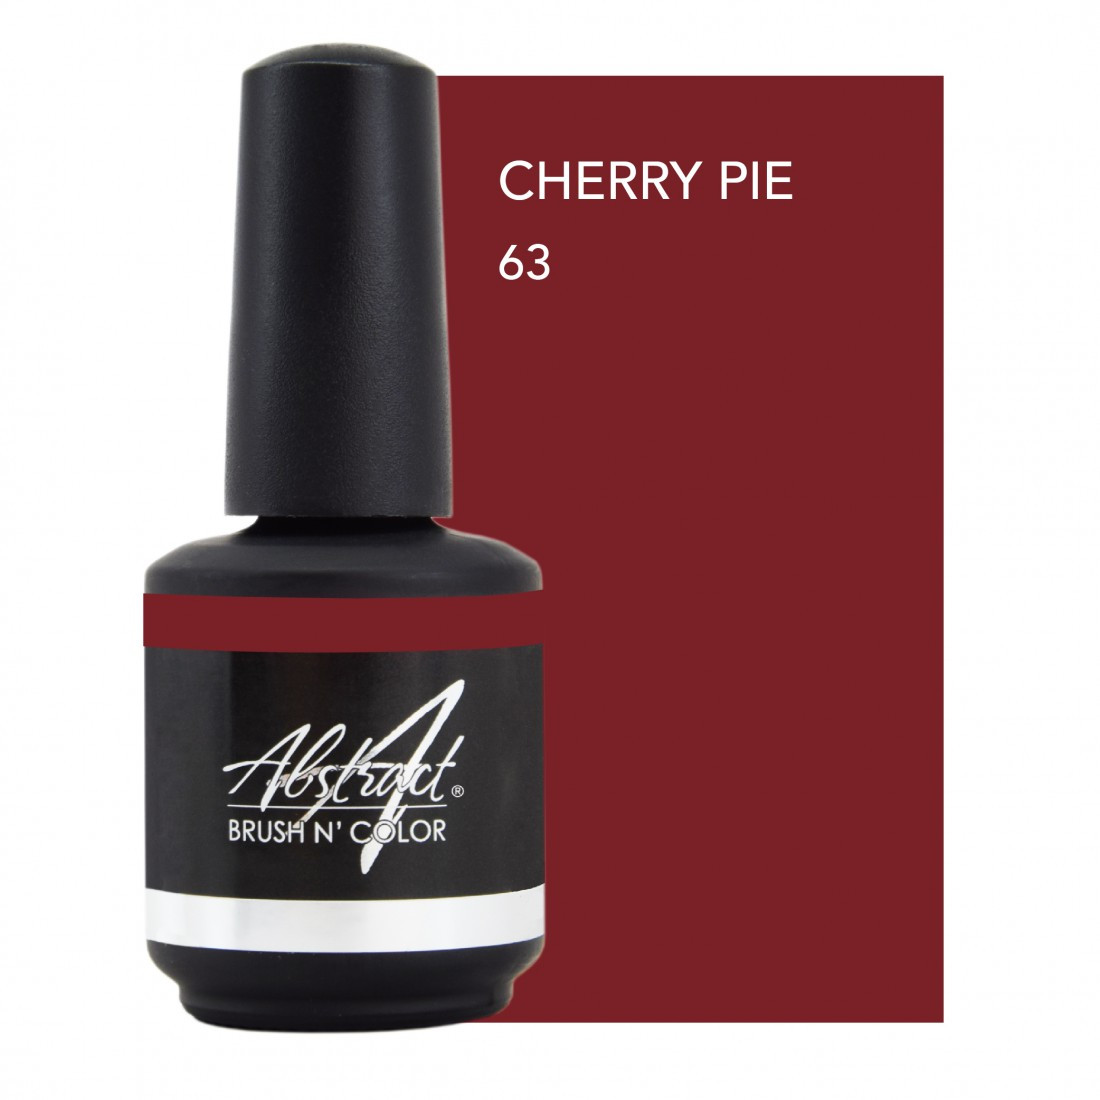 Abstract Cherry pie 15 ml